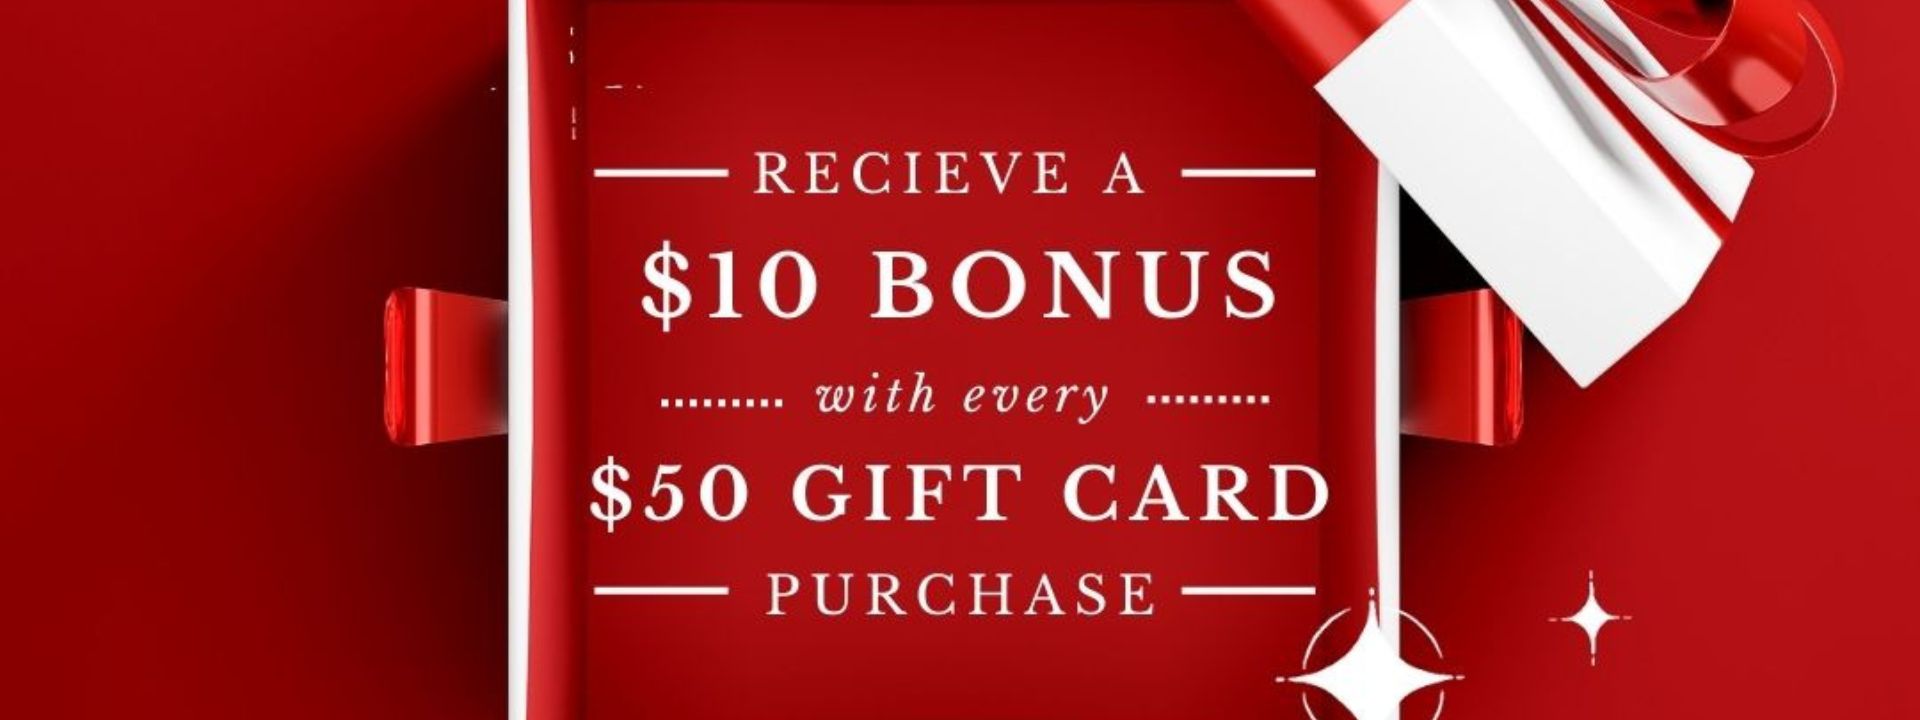 Gift Card Bonus program Nov 10-17. Get a $10 bonus card with every $50 card purchase